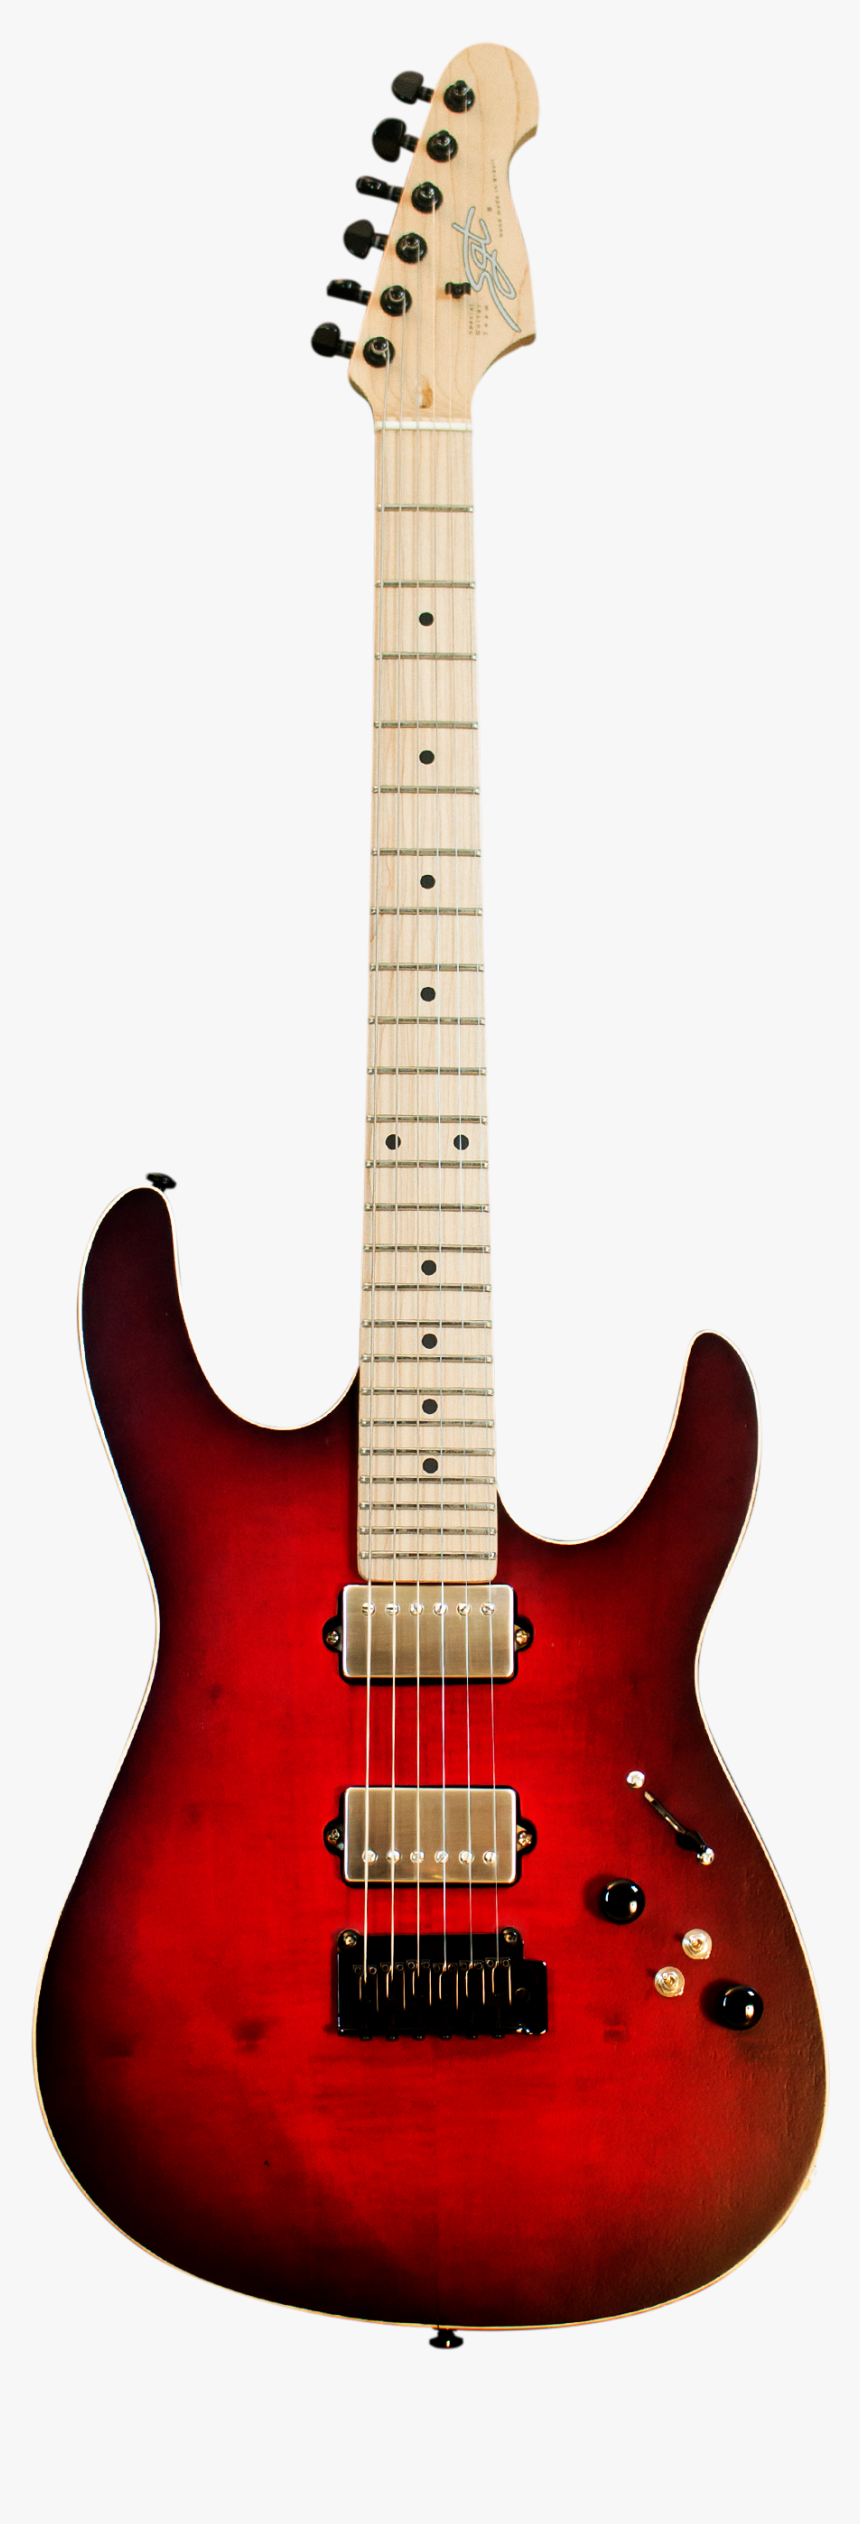 Featured image of post Guitarra Vermelha Desenho Png Solo aceptamos im genes de alta calidad m nimo 400x400 p xeles